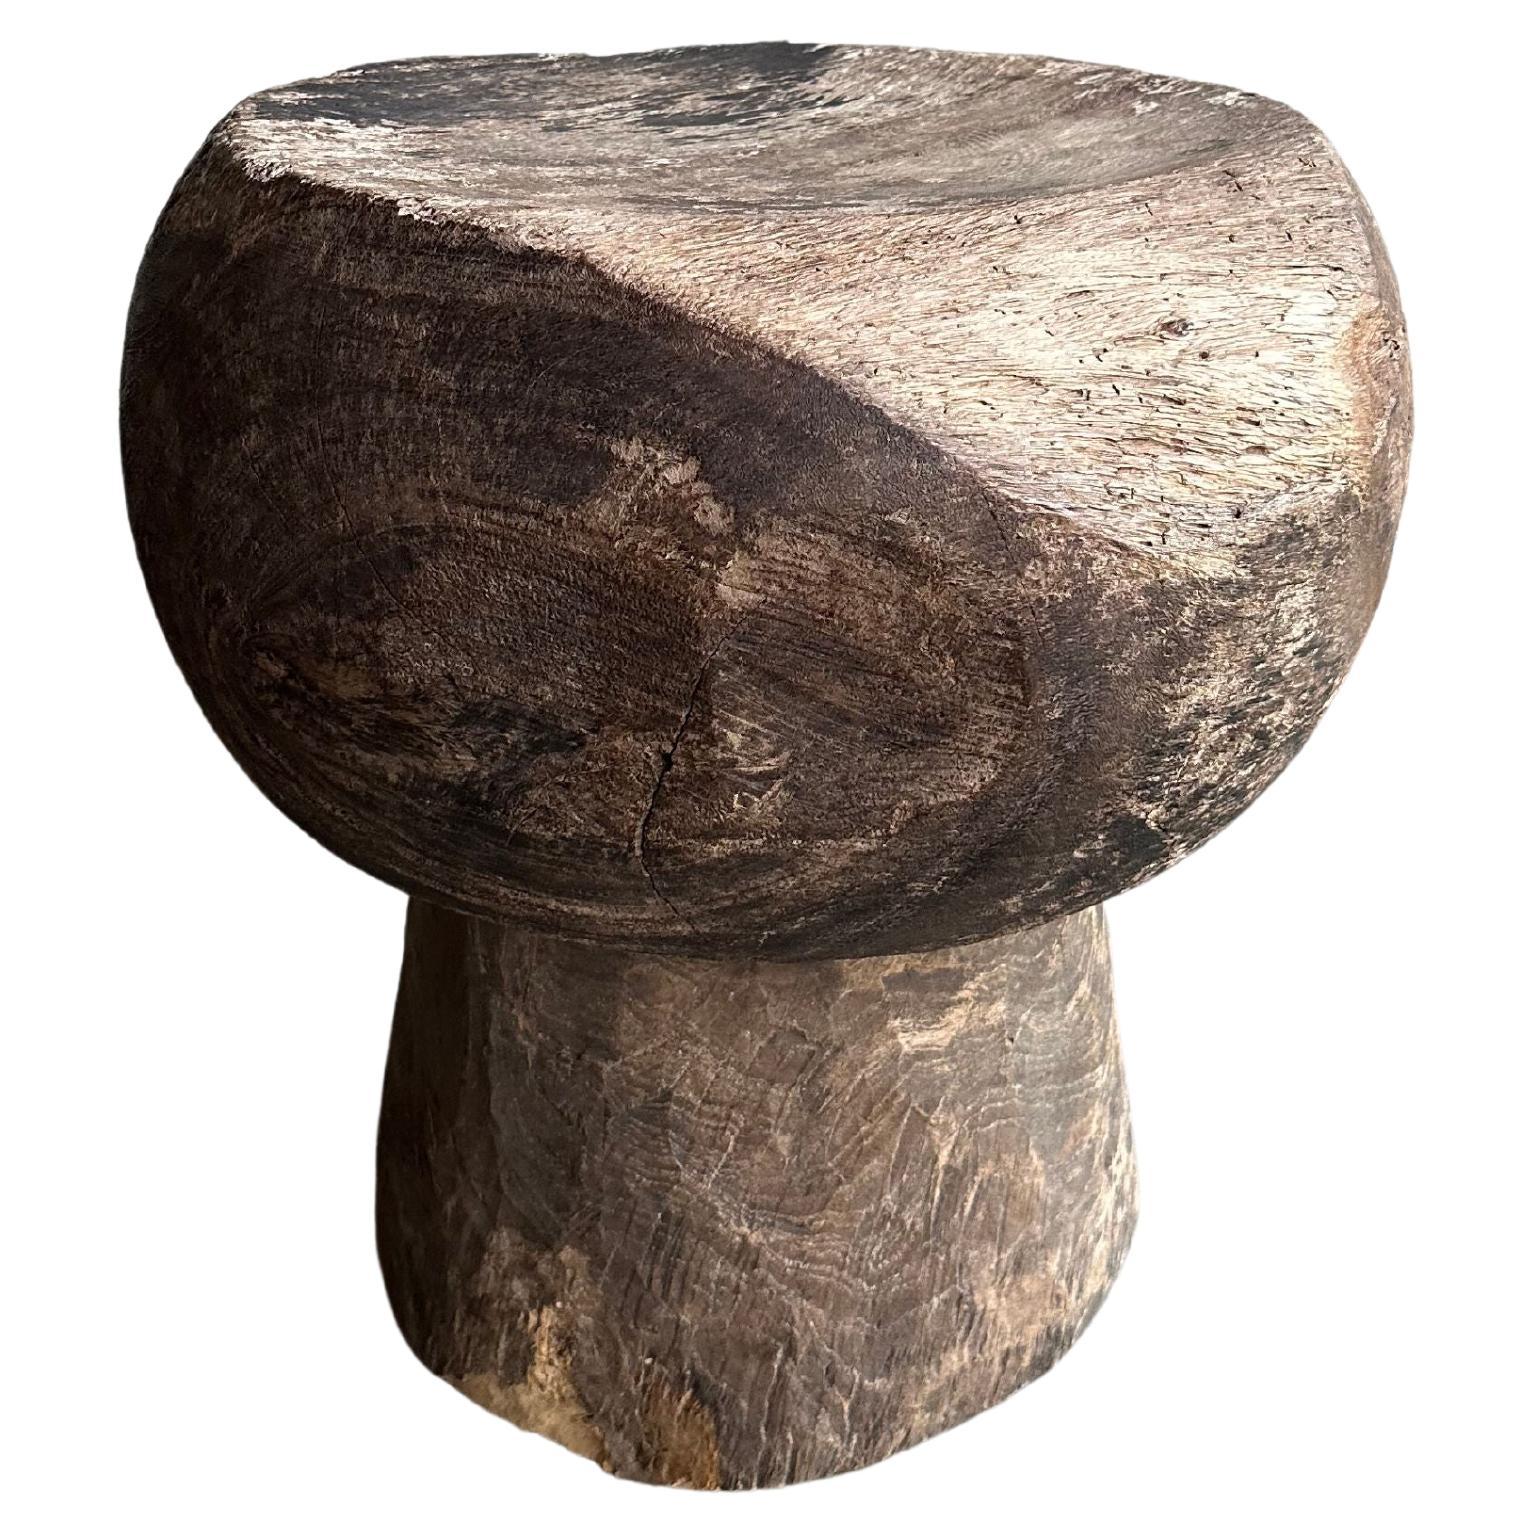 Suar Wood Stool From Java, Modern Organic